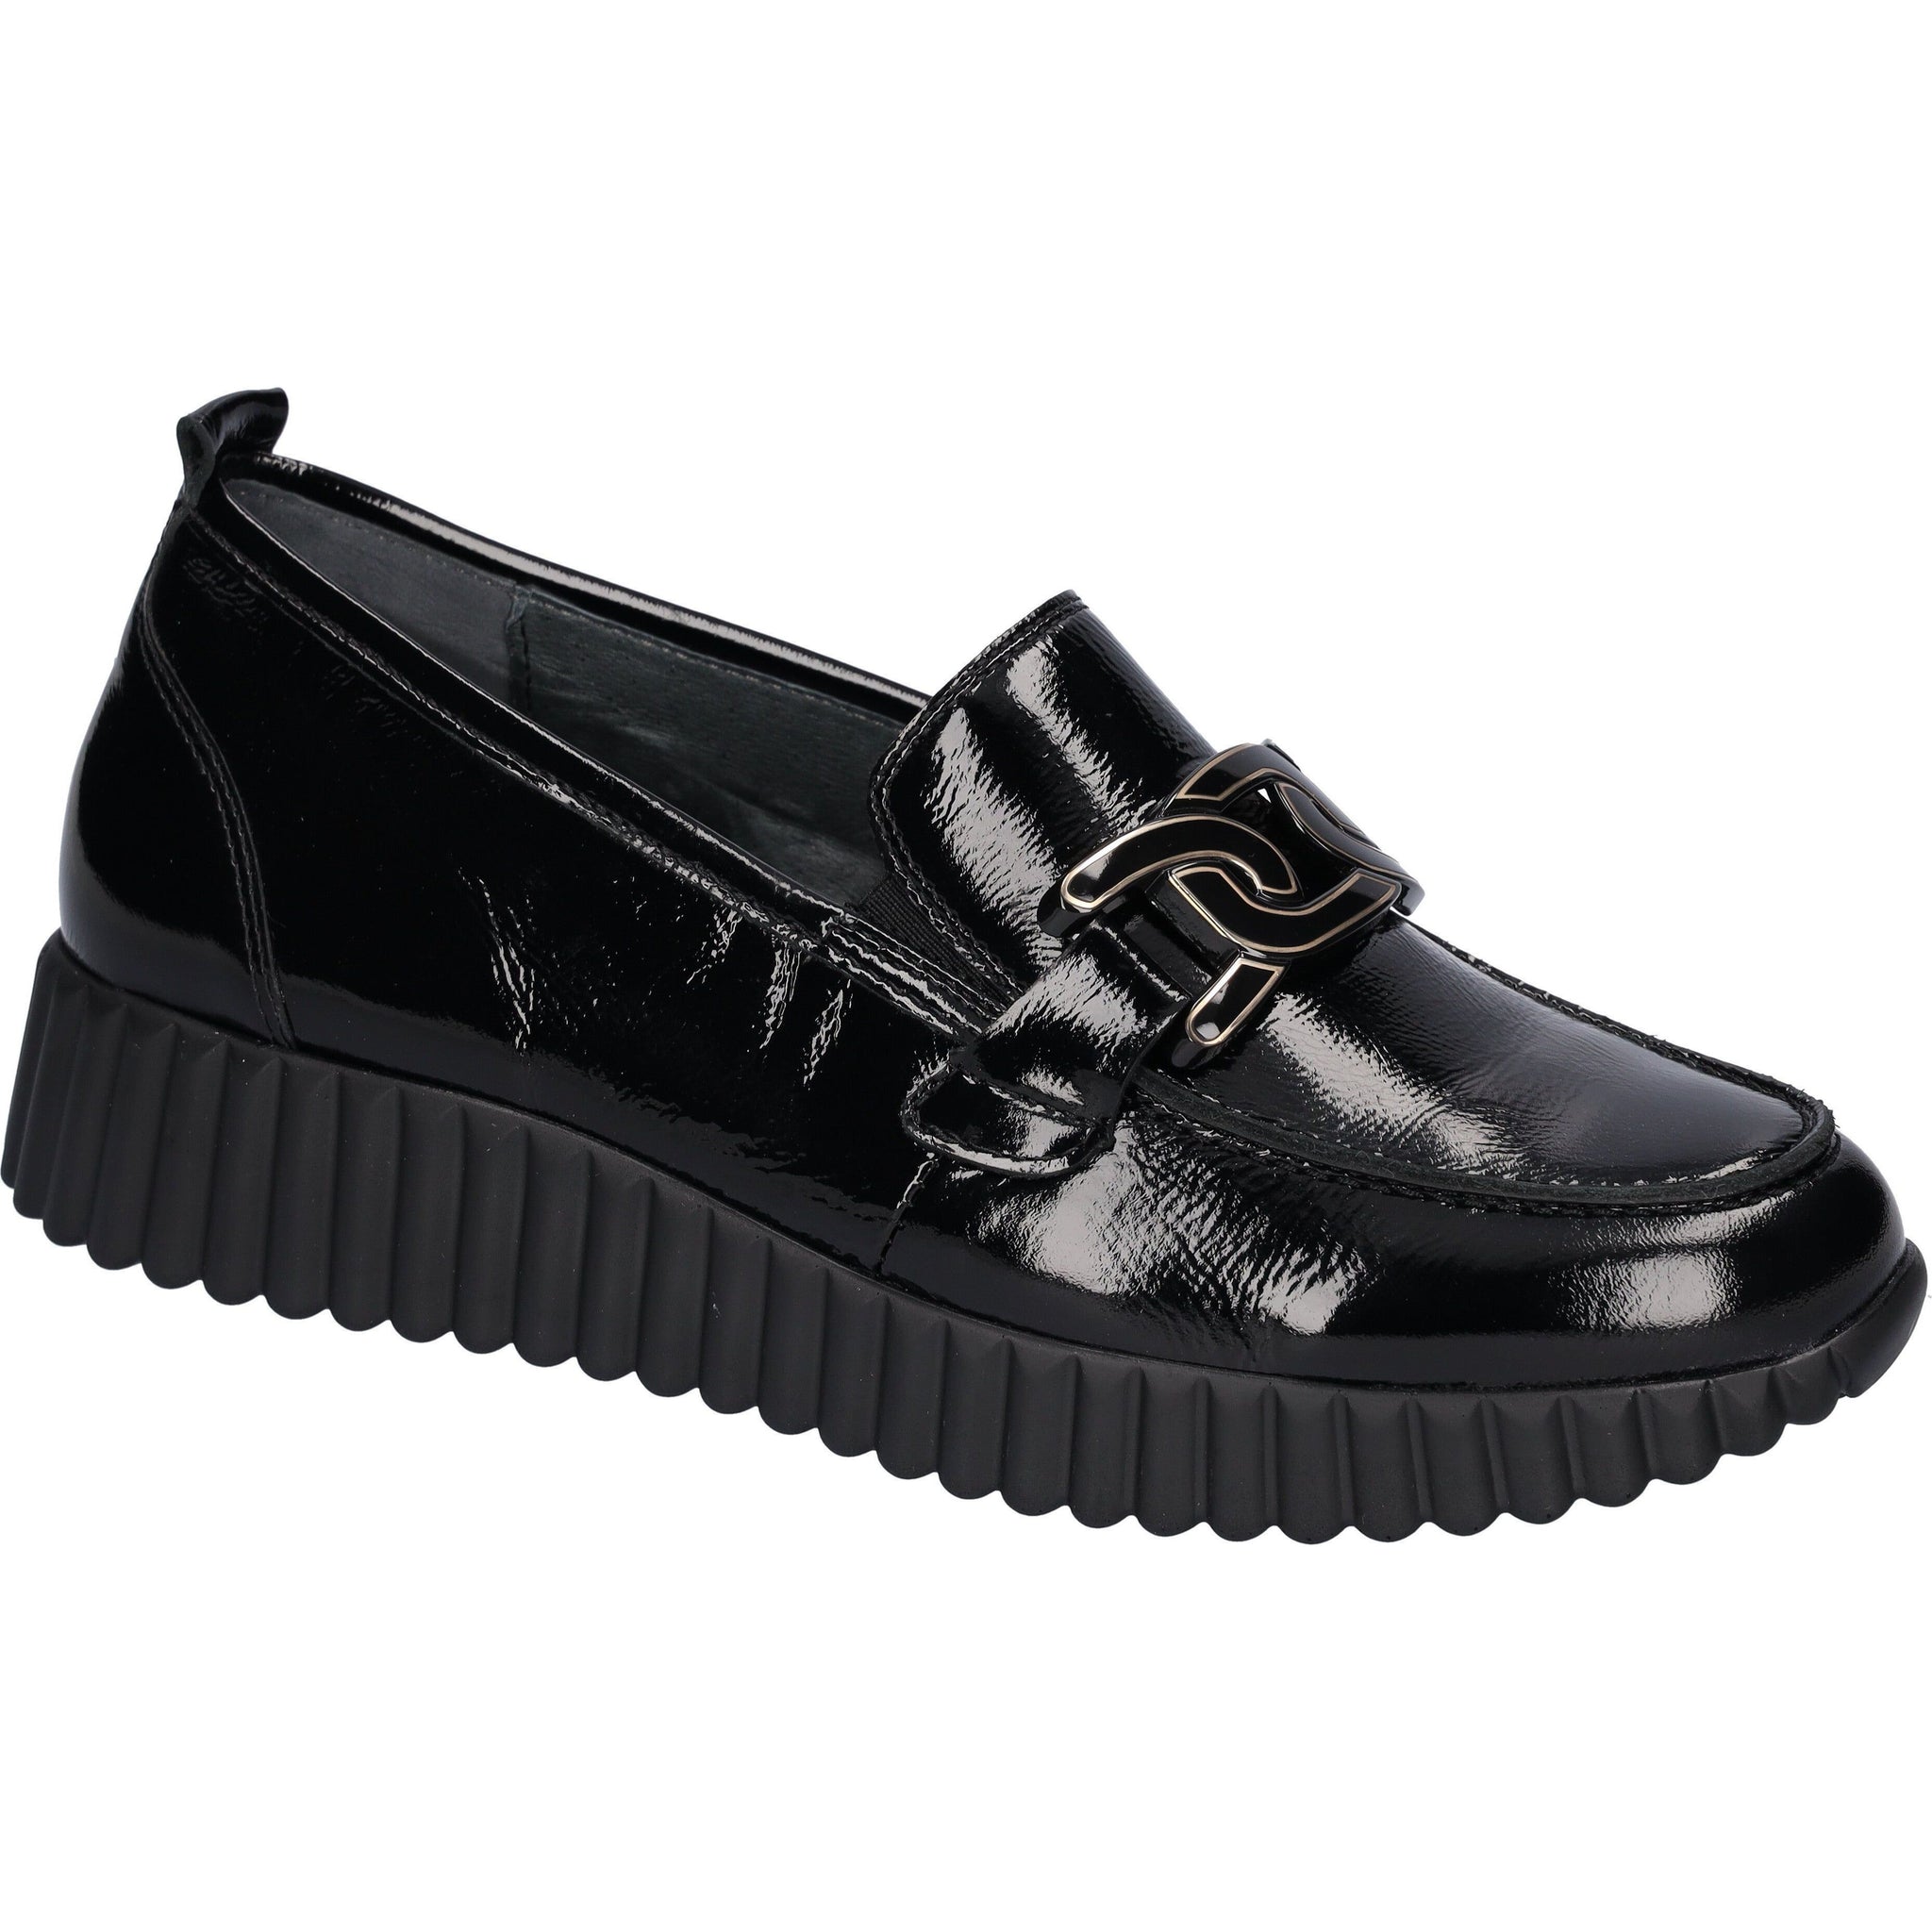 Waldlaufer H-Lorela (749504)- Ladies Loafer in Black Patent| Waldlaufer | Wide Fit Shoes | Wisemans | Bantry | Shoe Shop | West Cork | Munster | Ireland